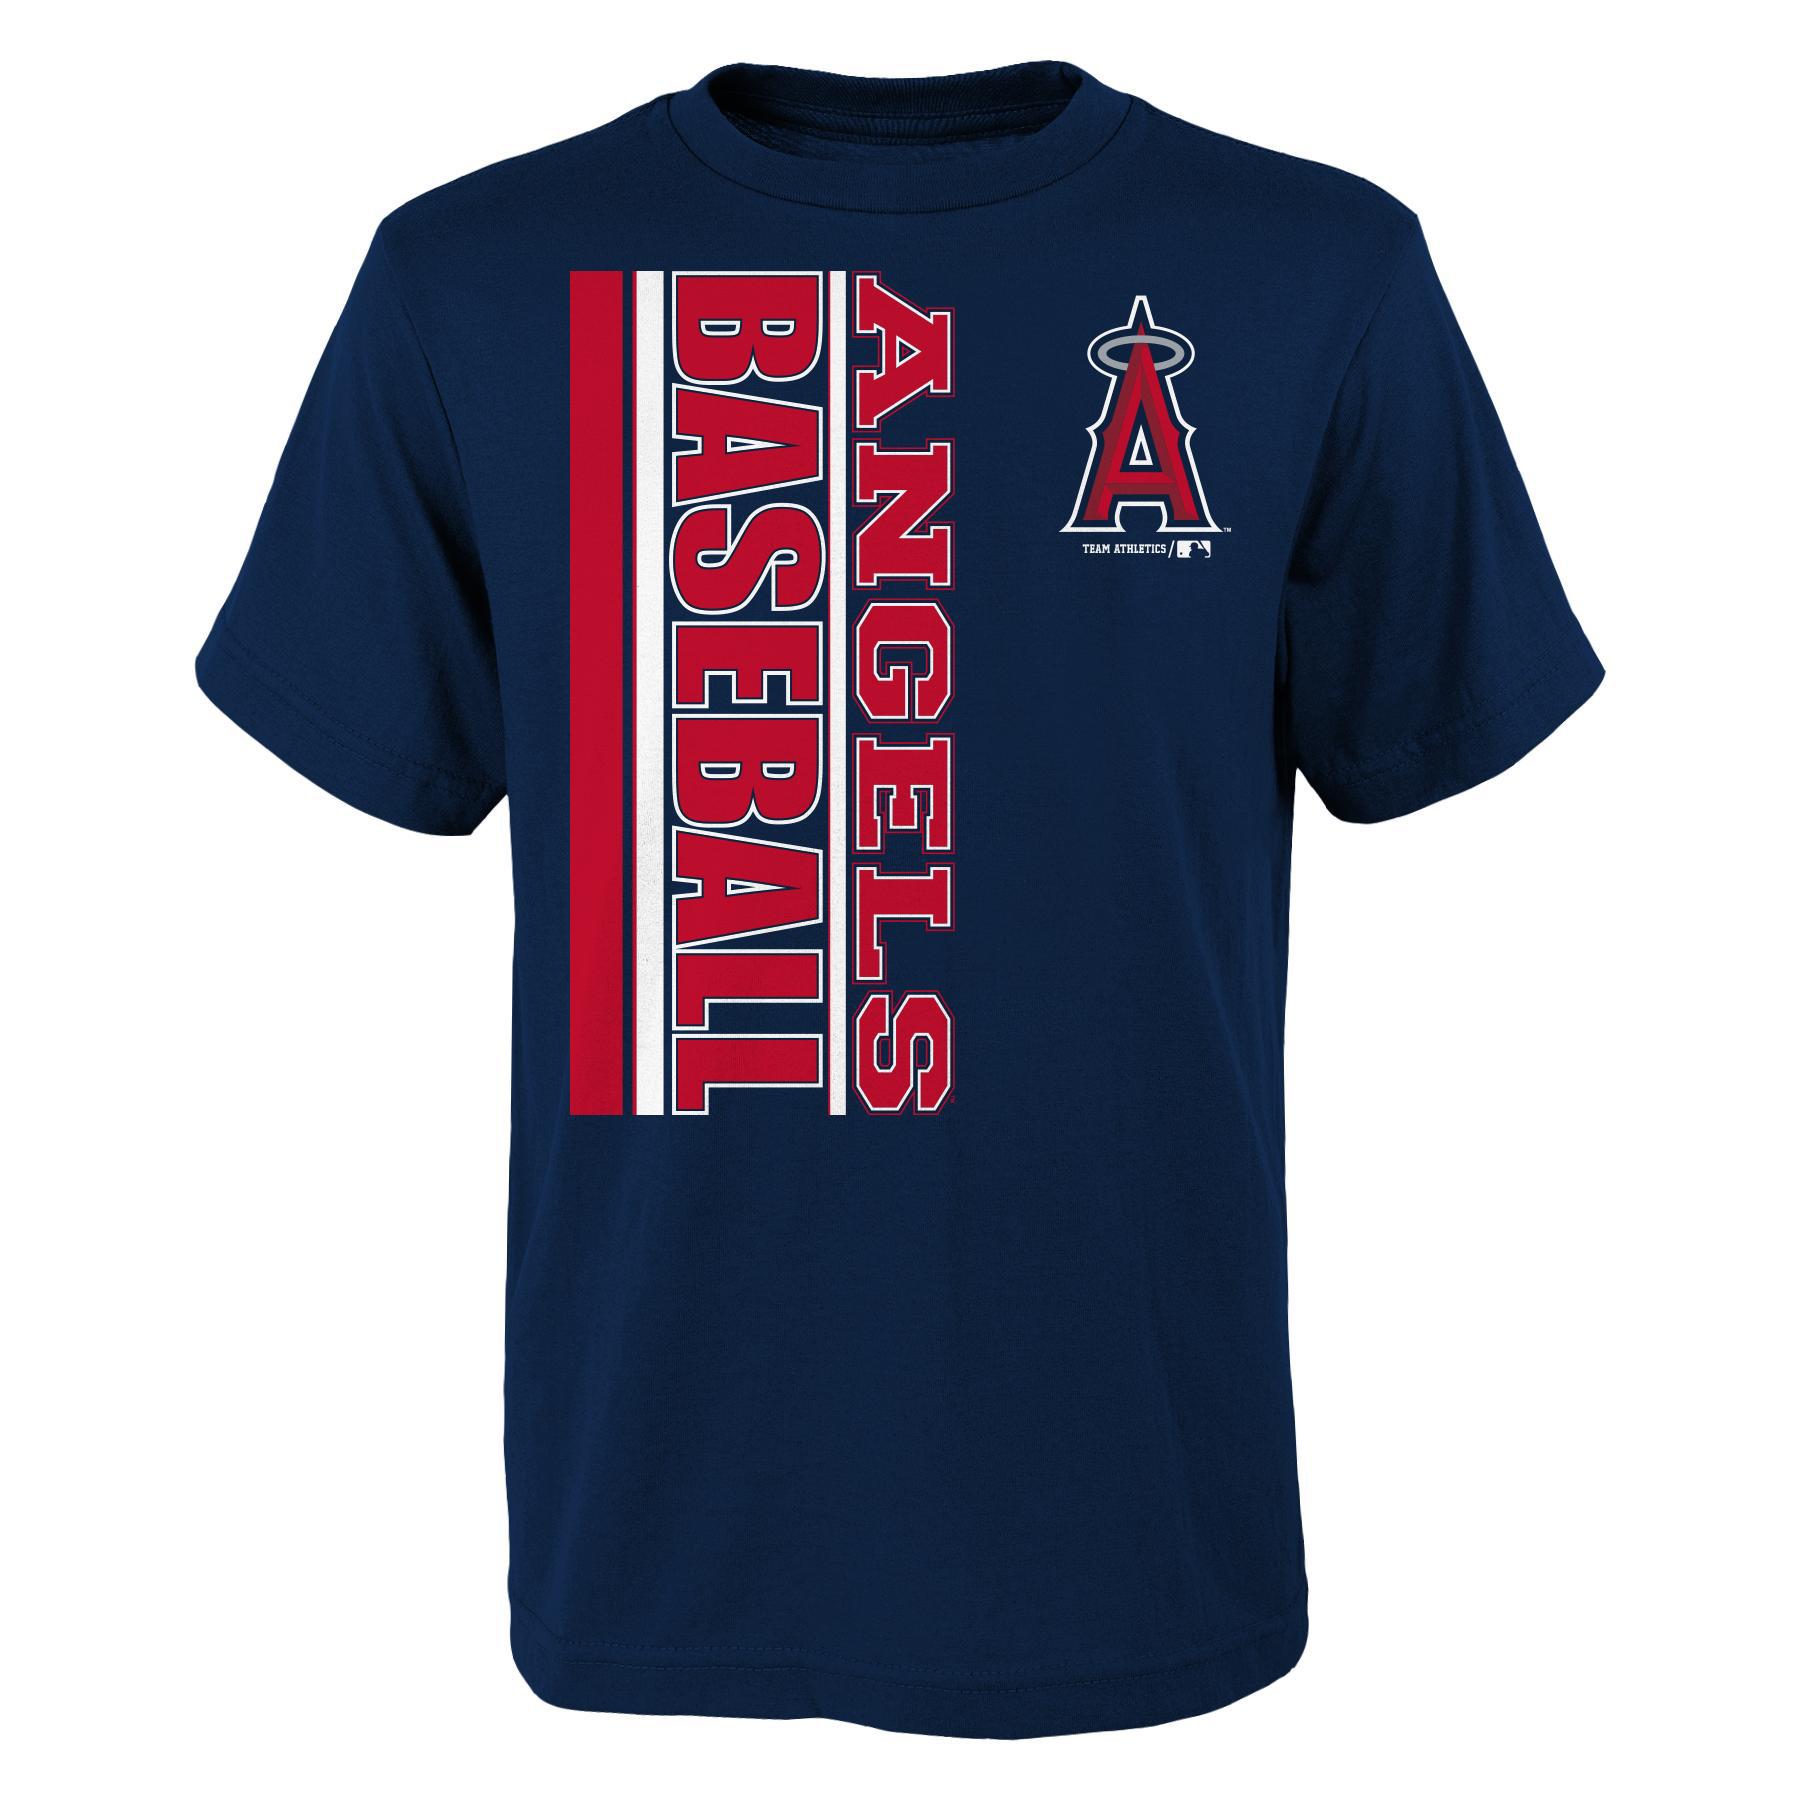 MLB Boys' Graphic T-Shirt - Los Angeles Angels of Anaheim